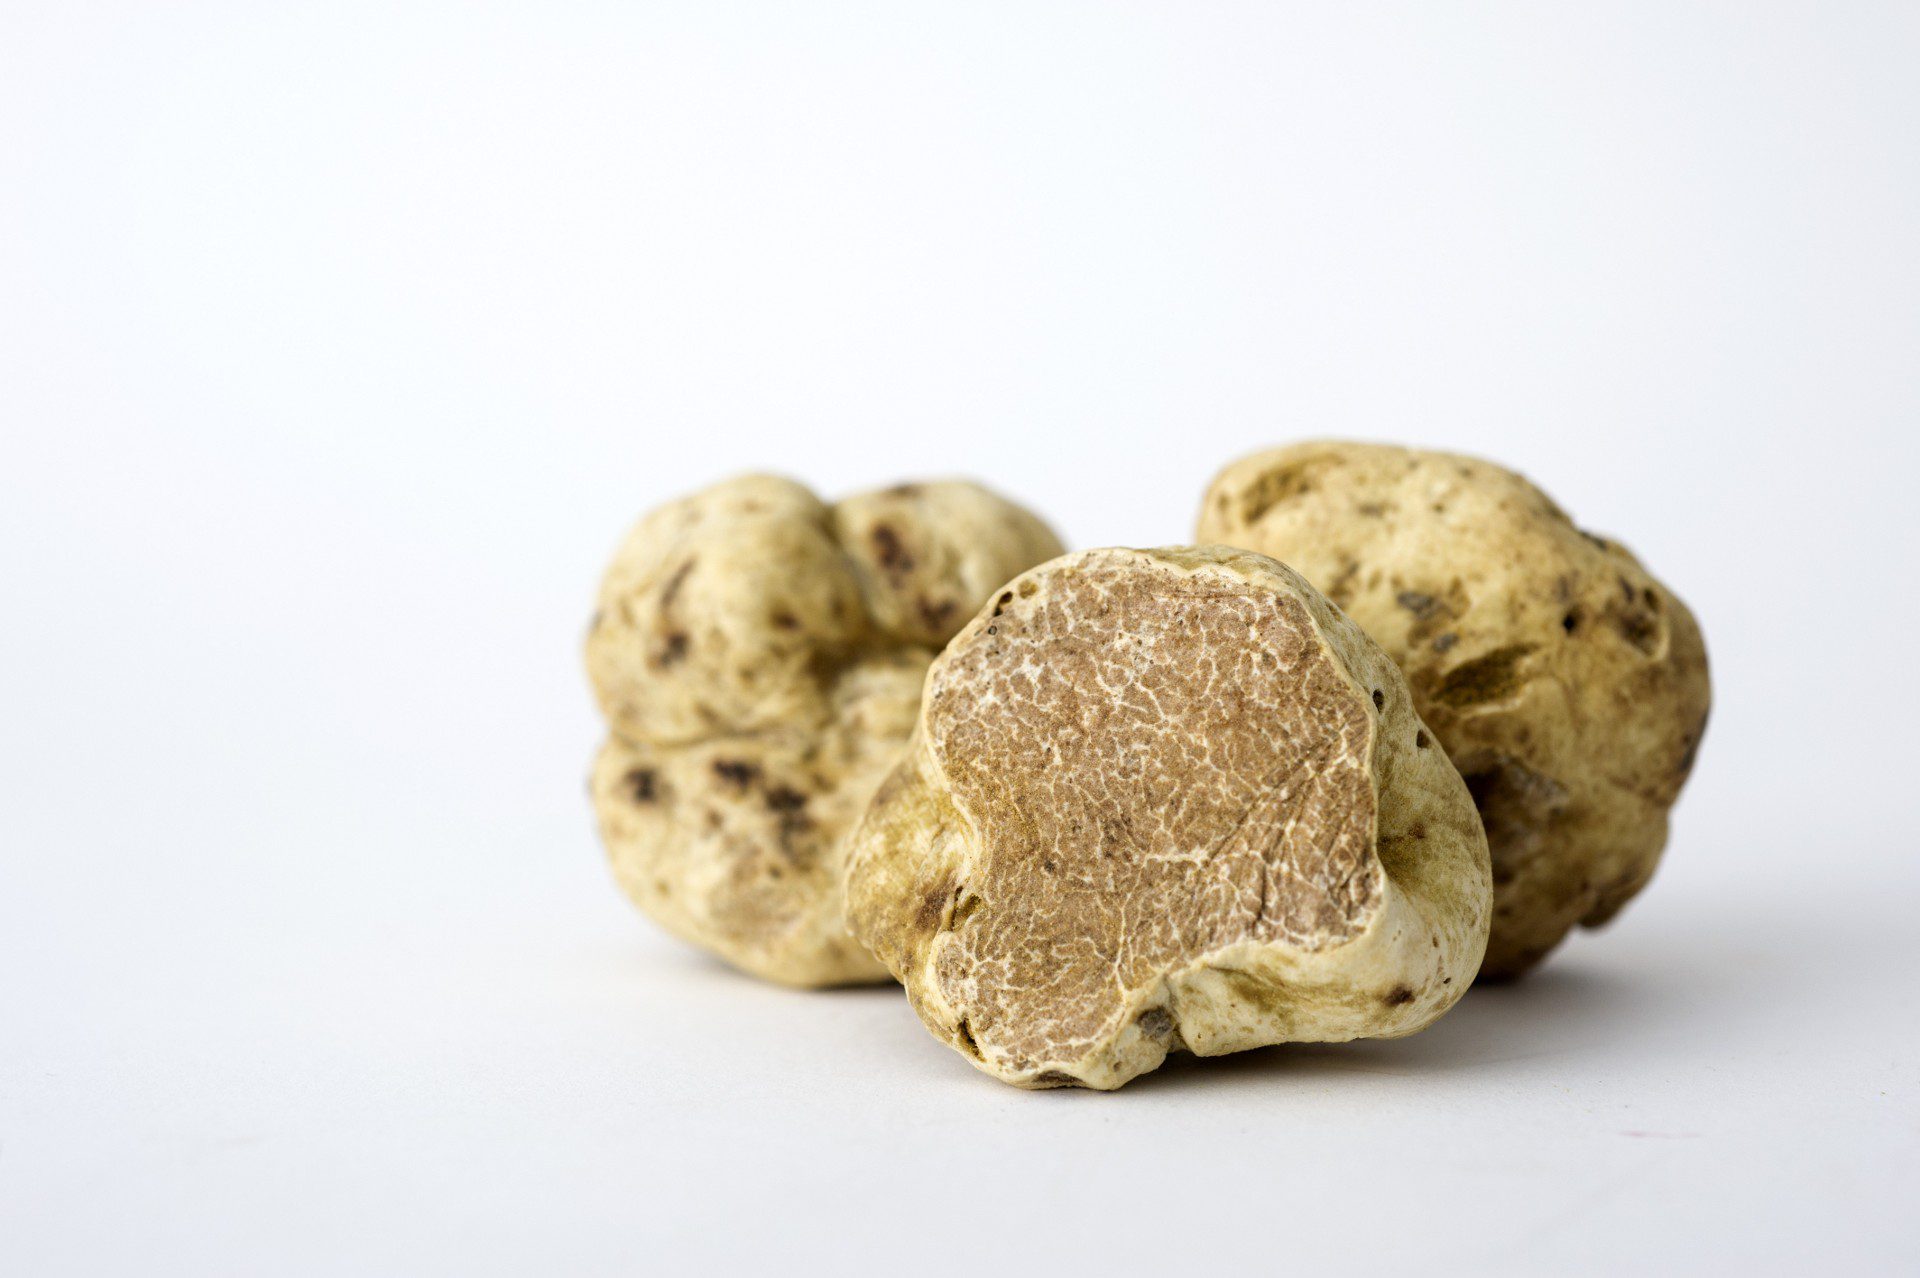 White truffle pic